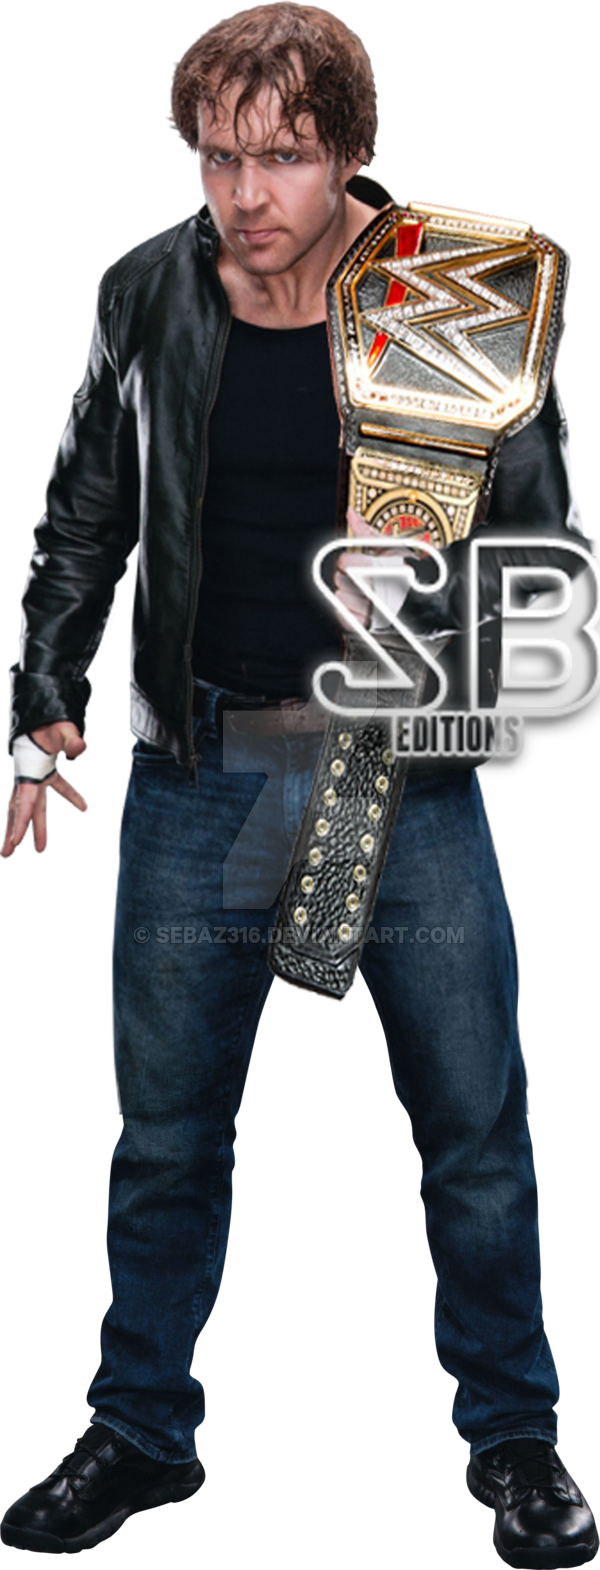 Dean Ambrose Wwe World Heavyweight Championship By Sebaz316 On